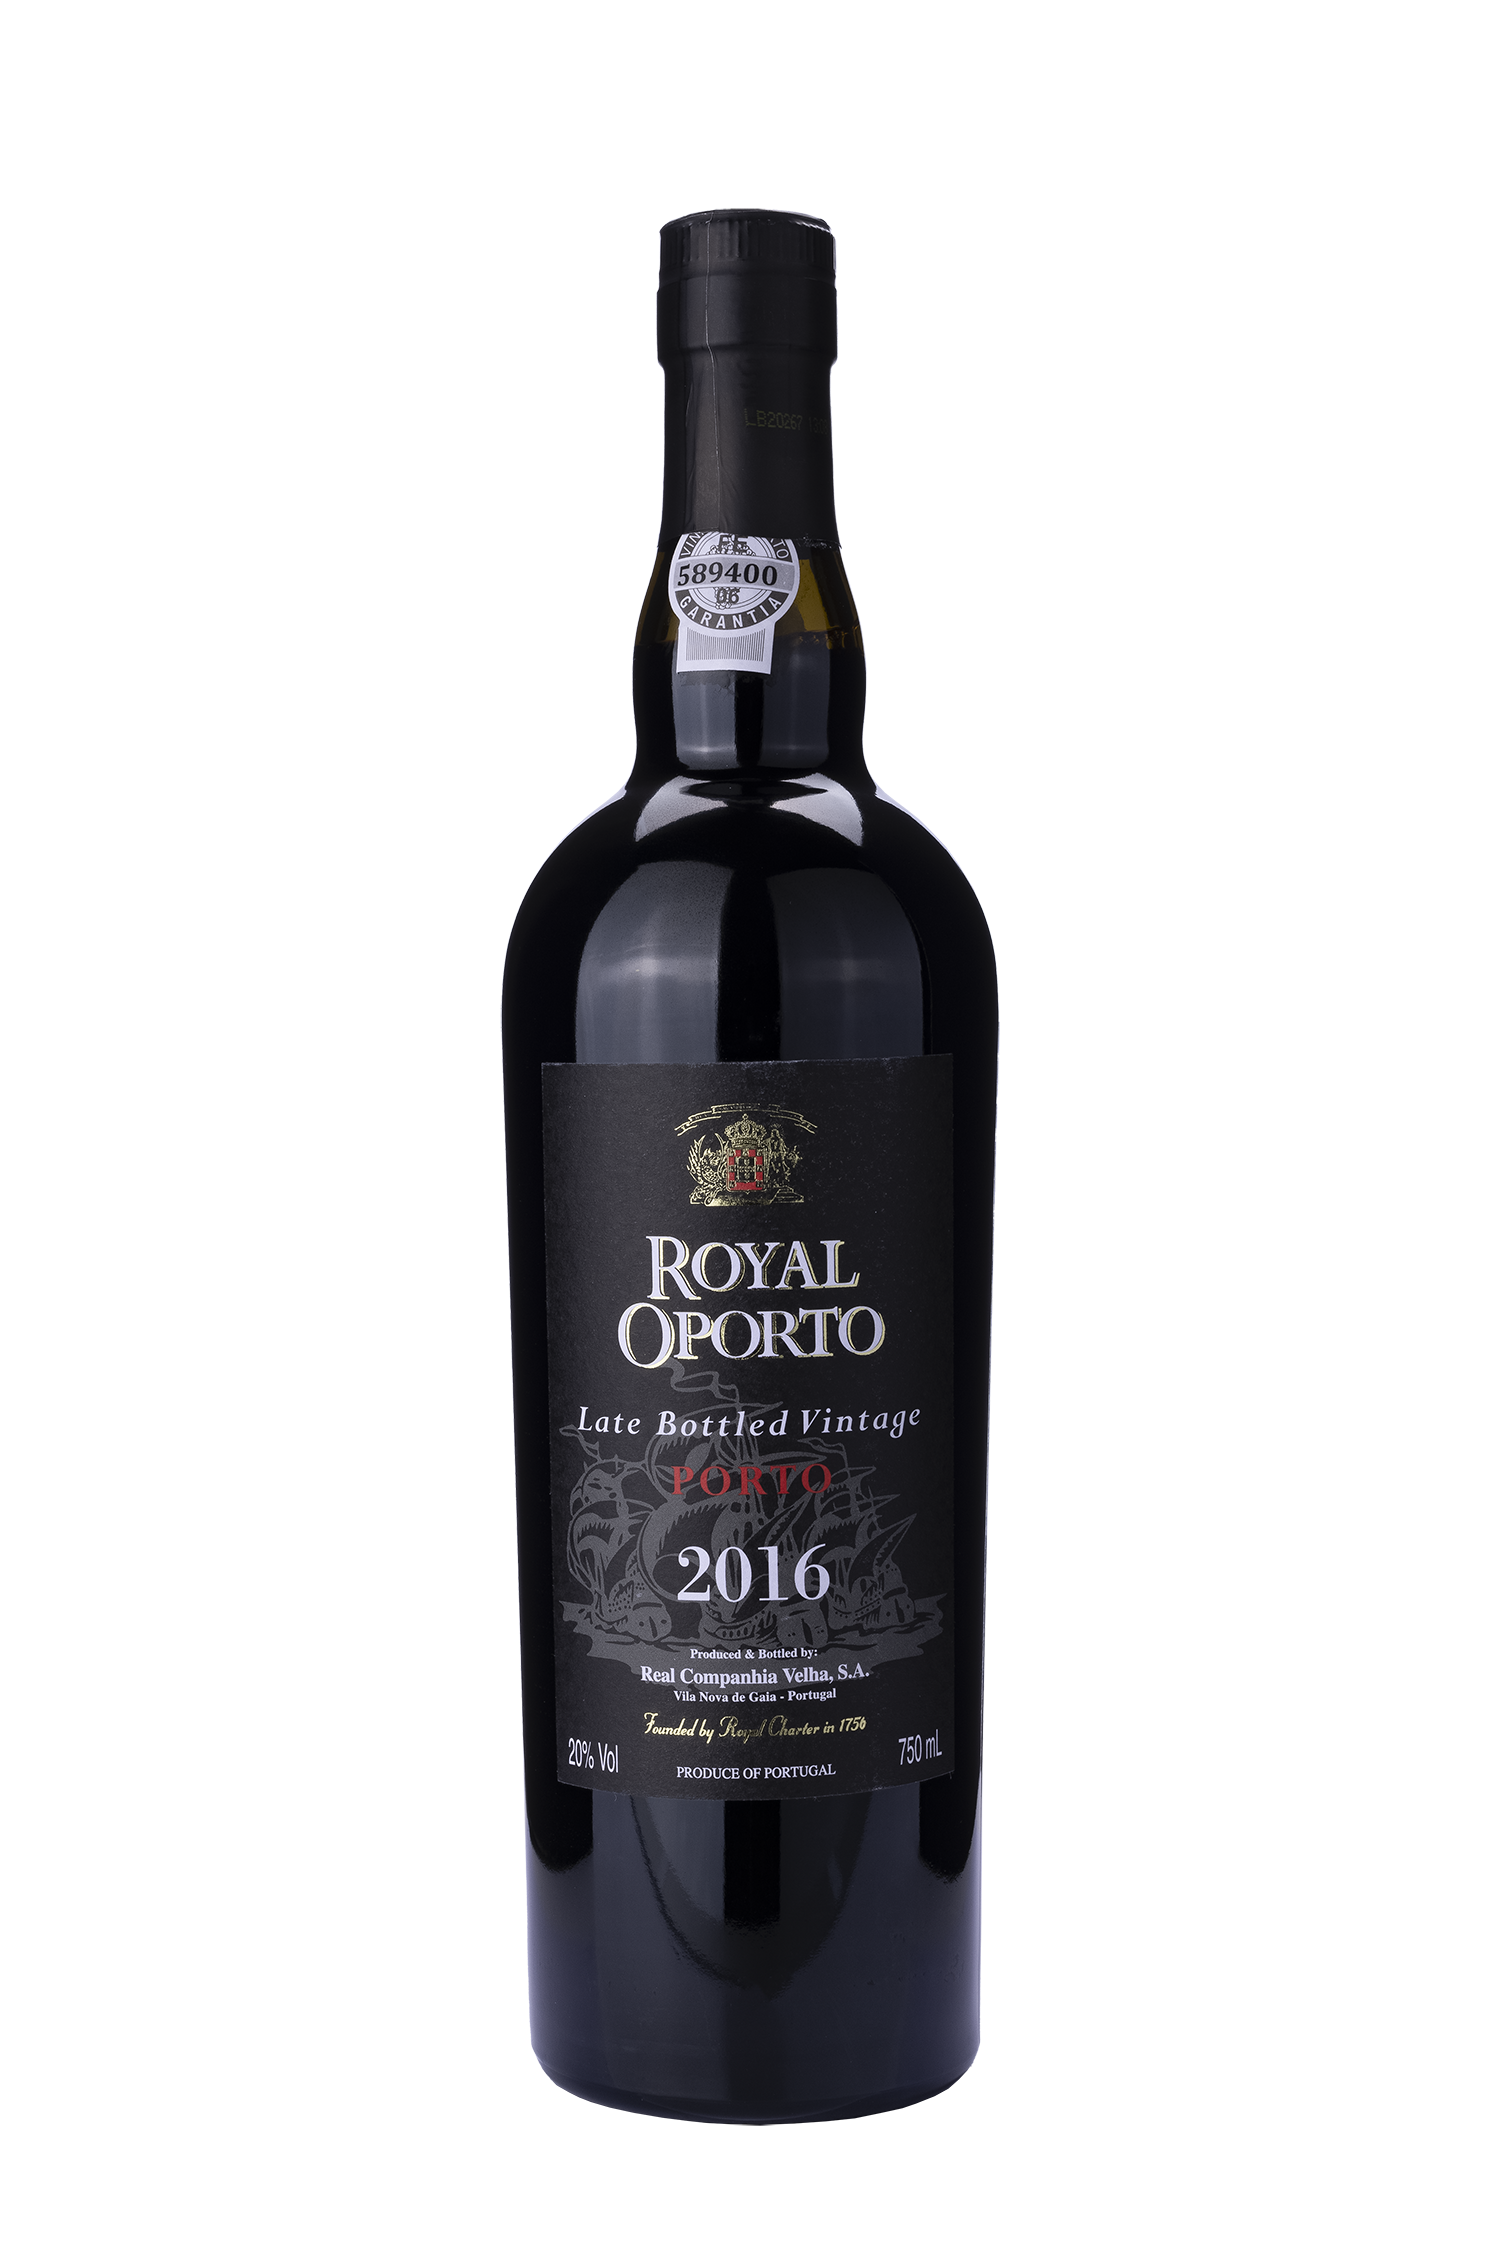 Royal Oporto Late Bottled Vintage Porto 2016 - Real Companhia Velha